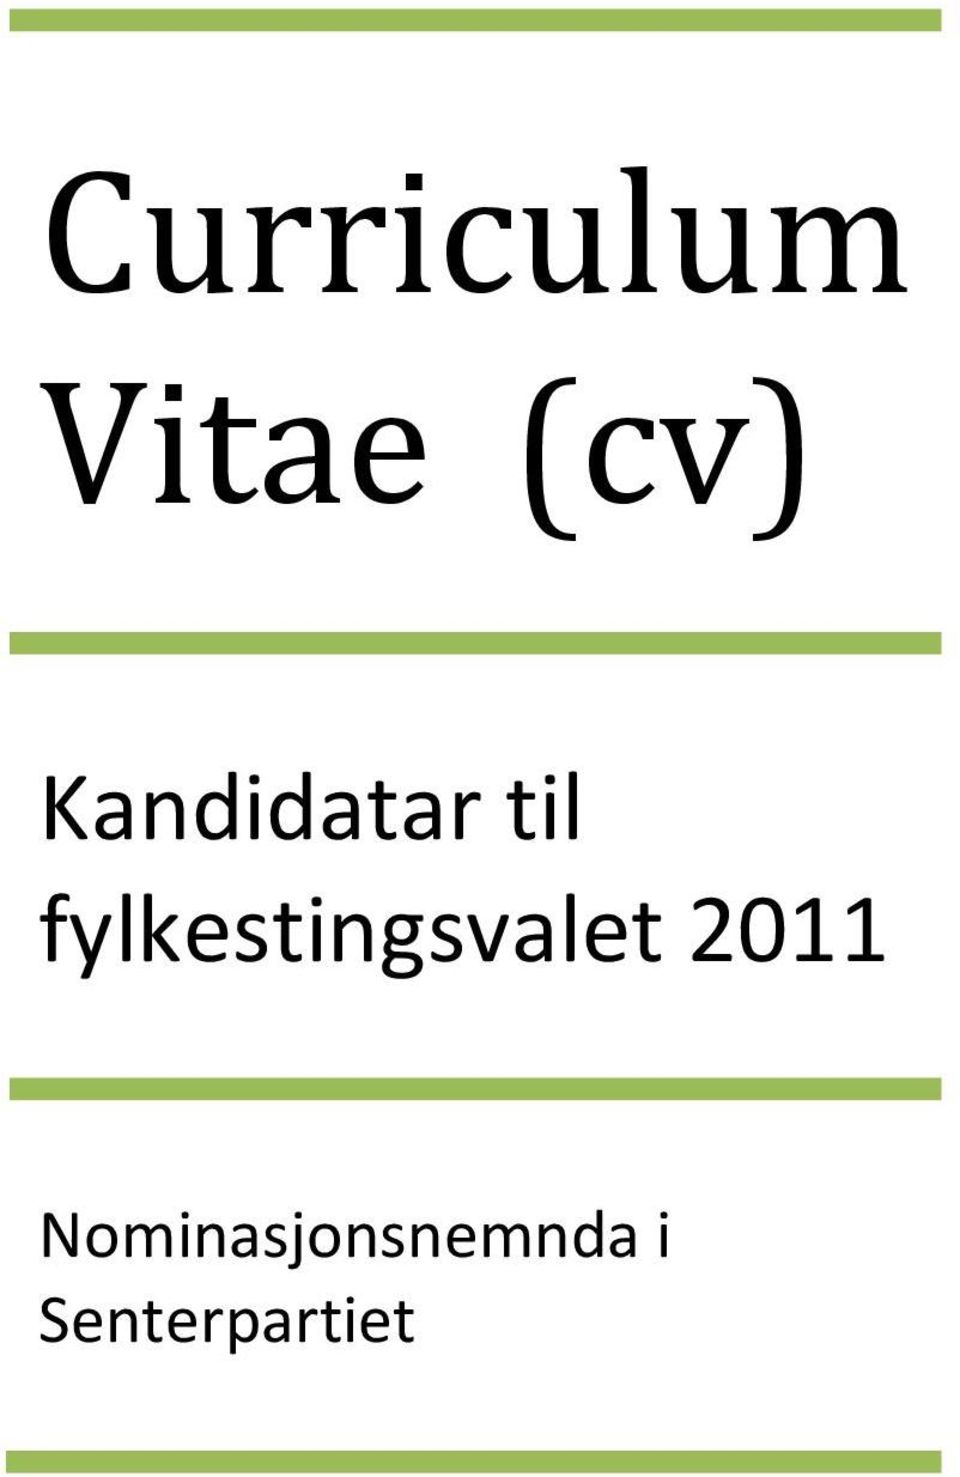 fylkestingsvalet 2011